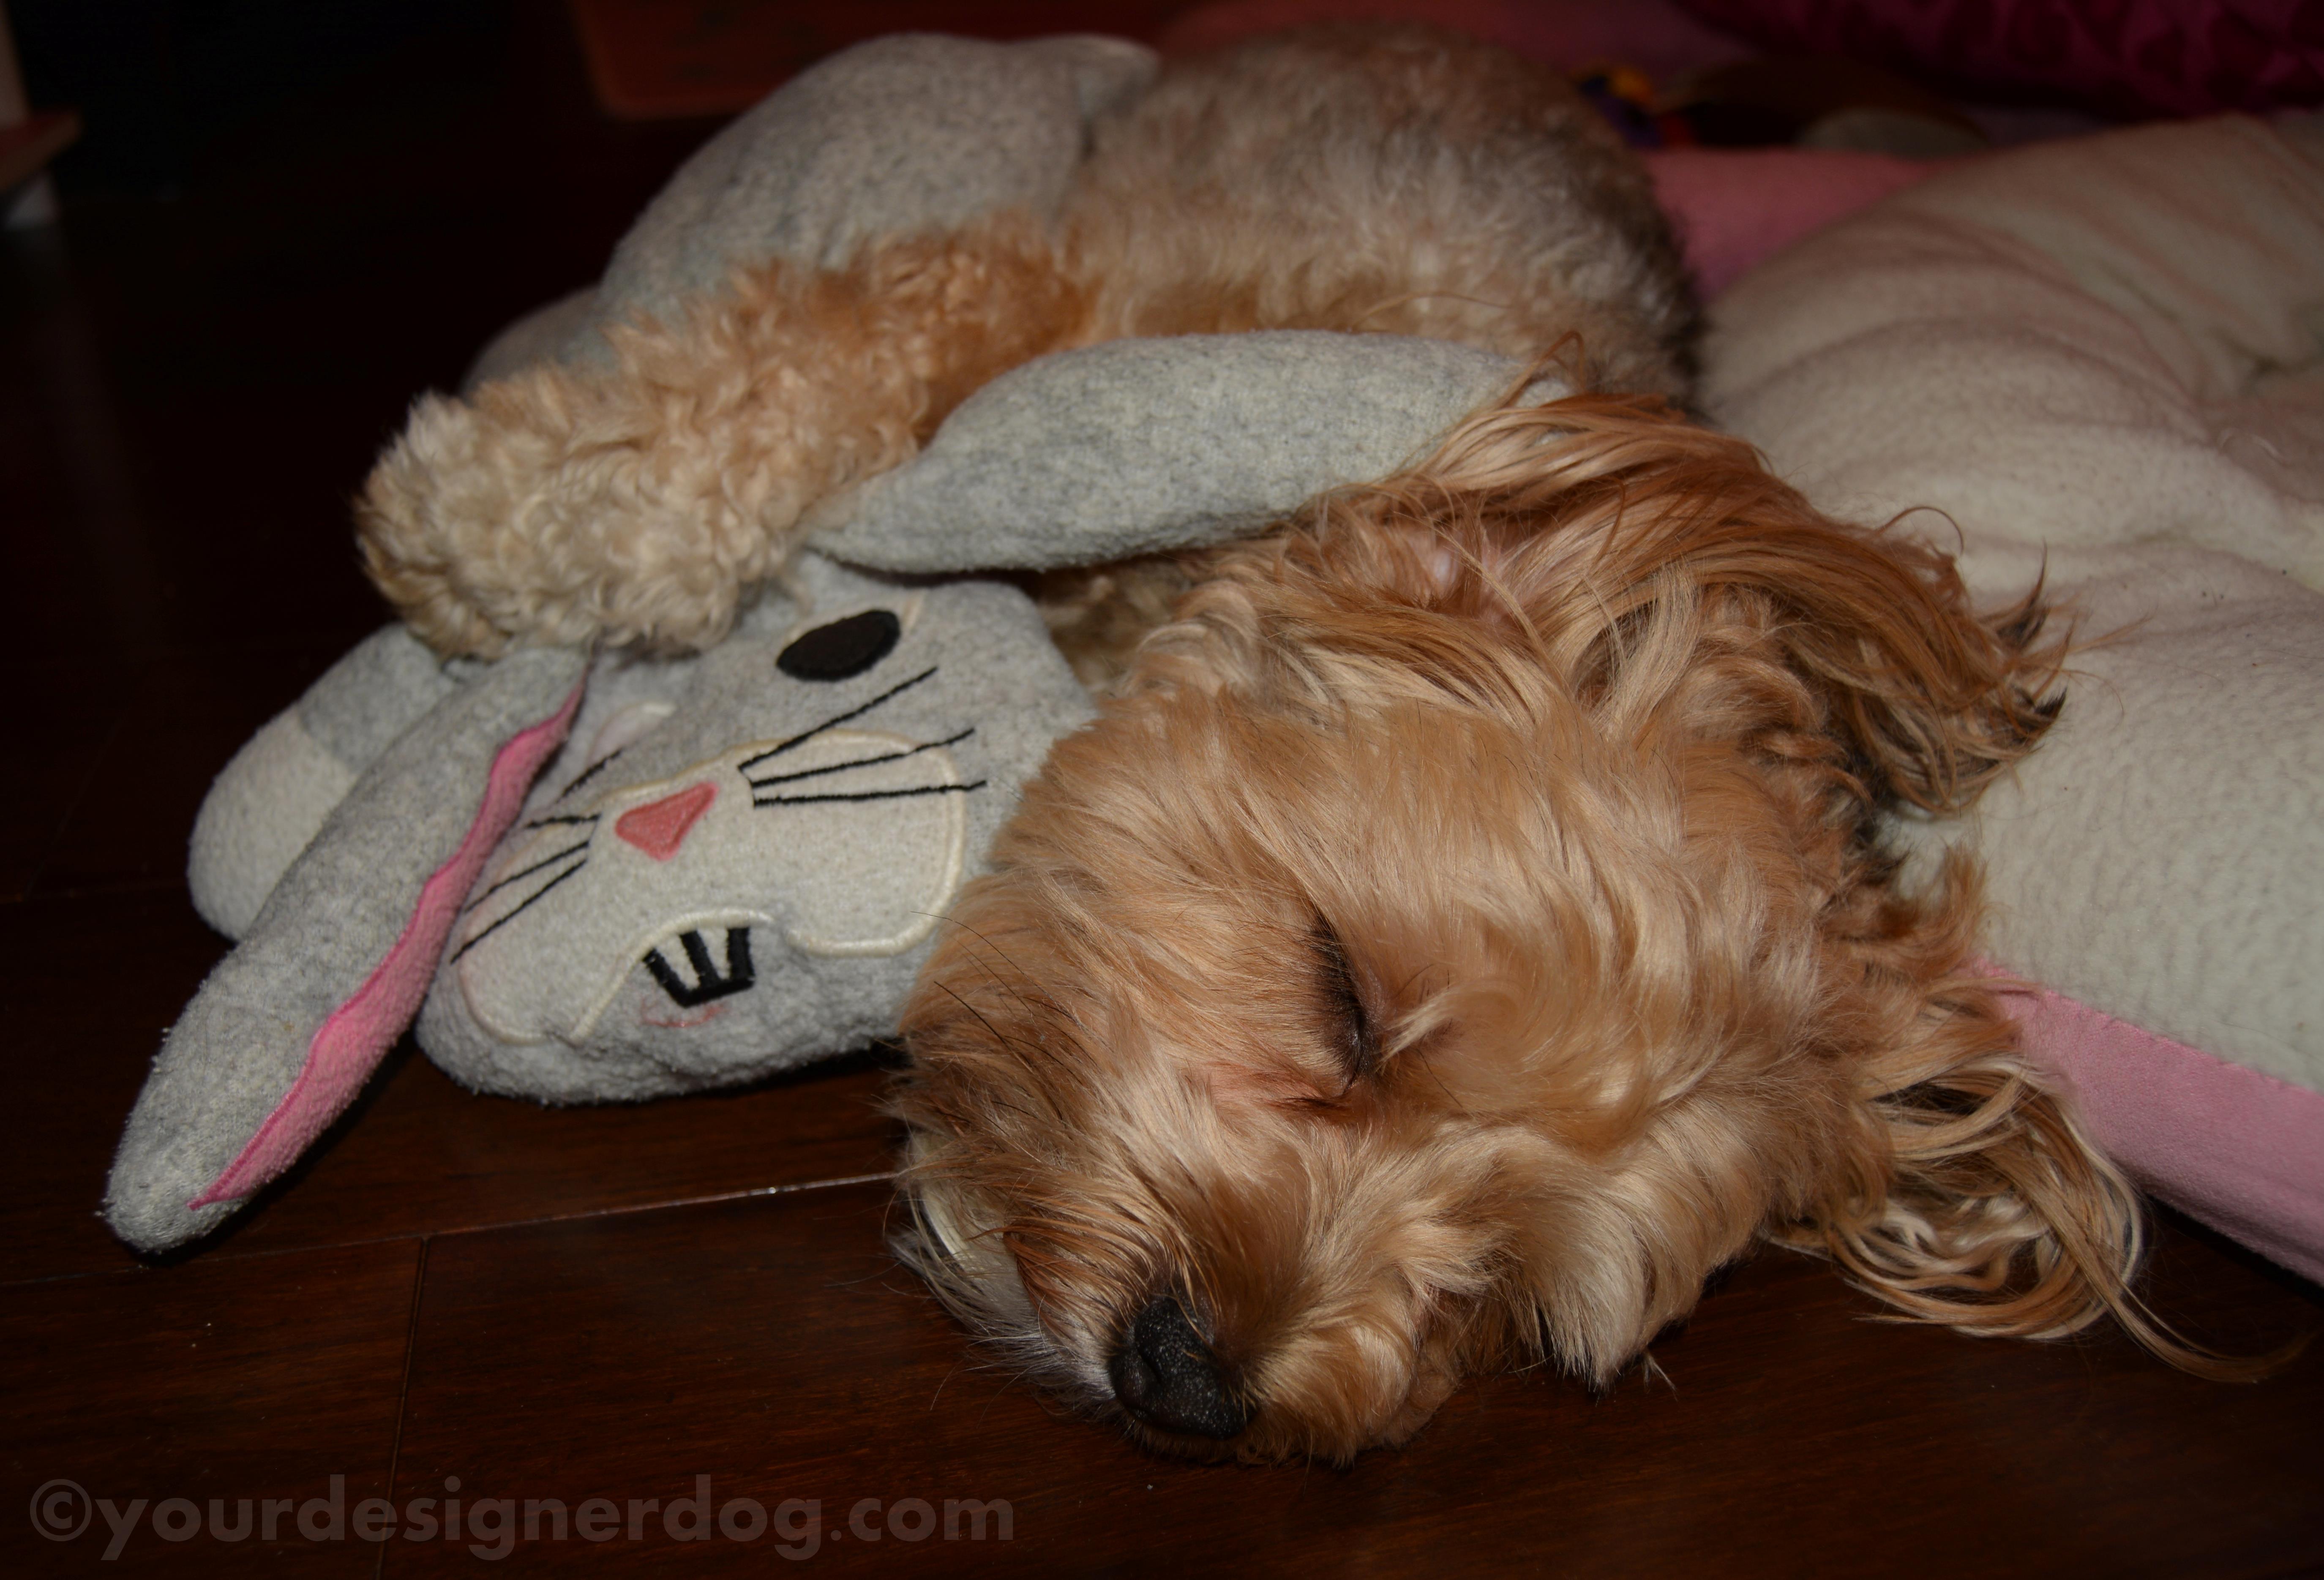 dogs, designer dogs, yorkipoo, yorkie poo, sleepy puppy, snuggly, stuffed animal, bunny